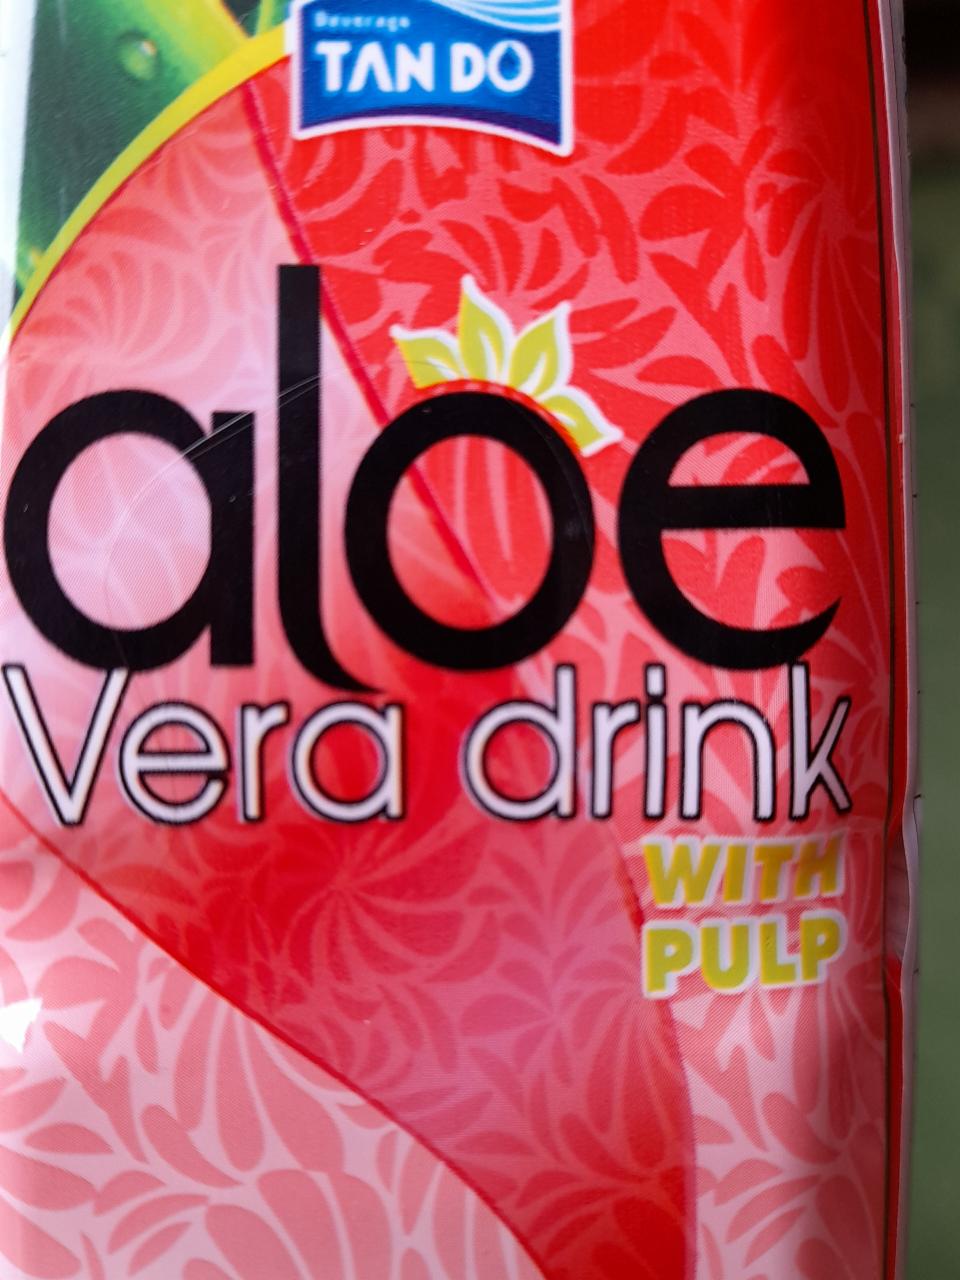 Fotografie - Aloe vera drink with pulp Tan Do